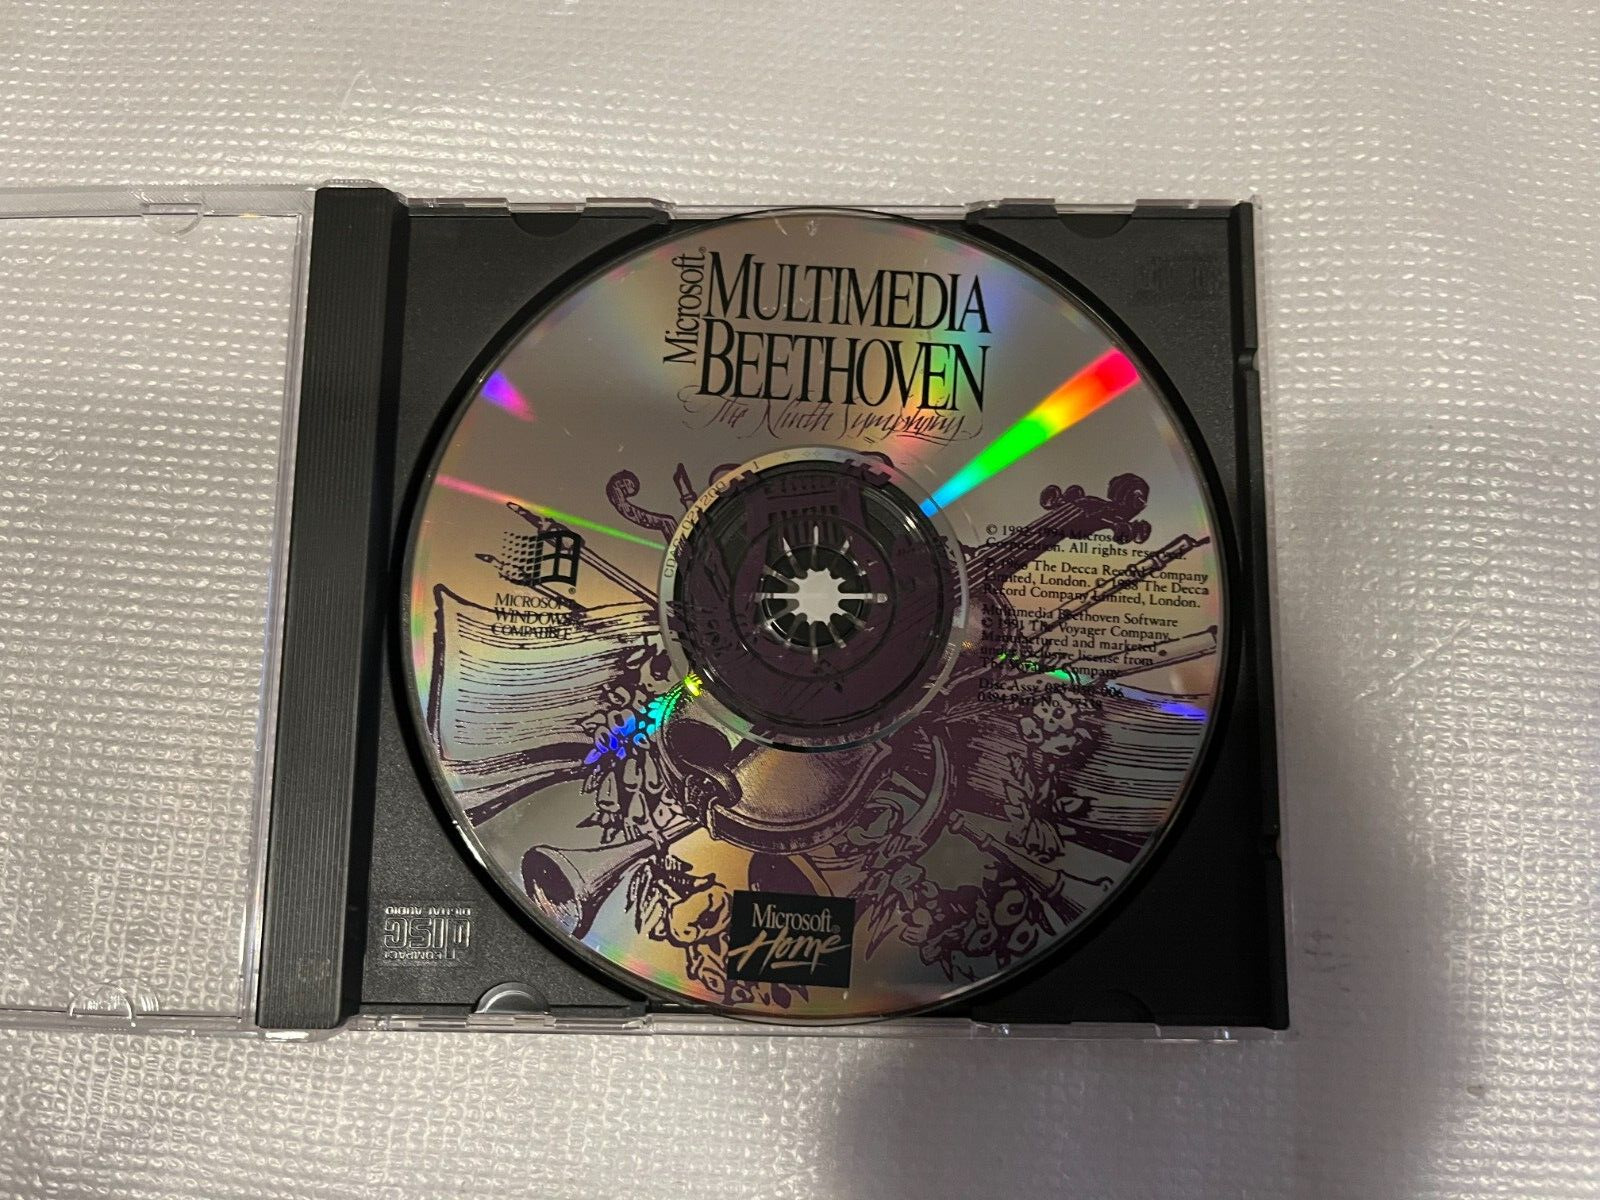 Microsoft Home - Multimedia Beethoven CD-ROM